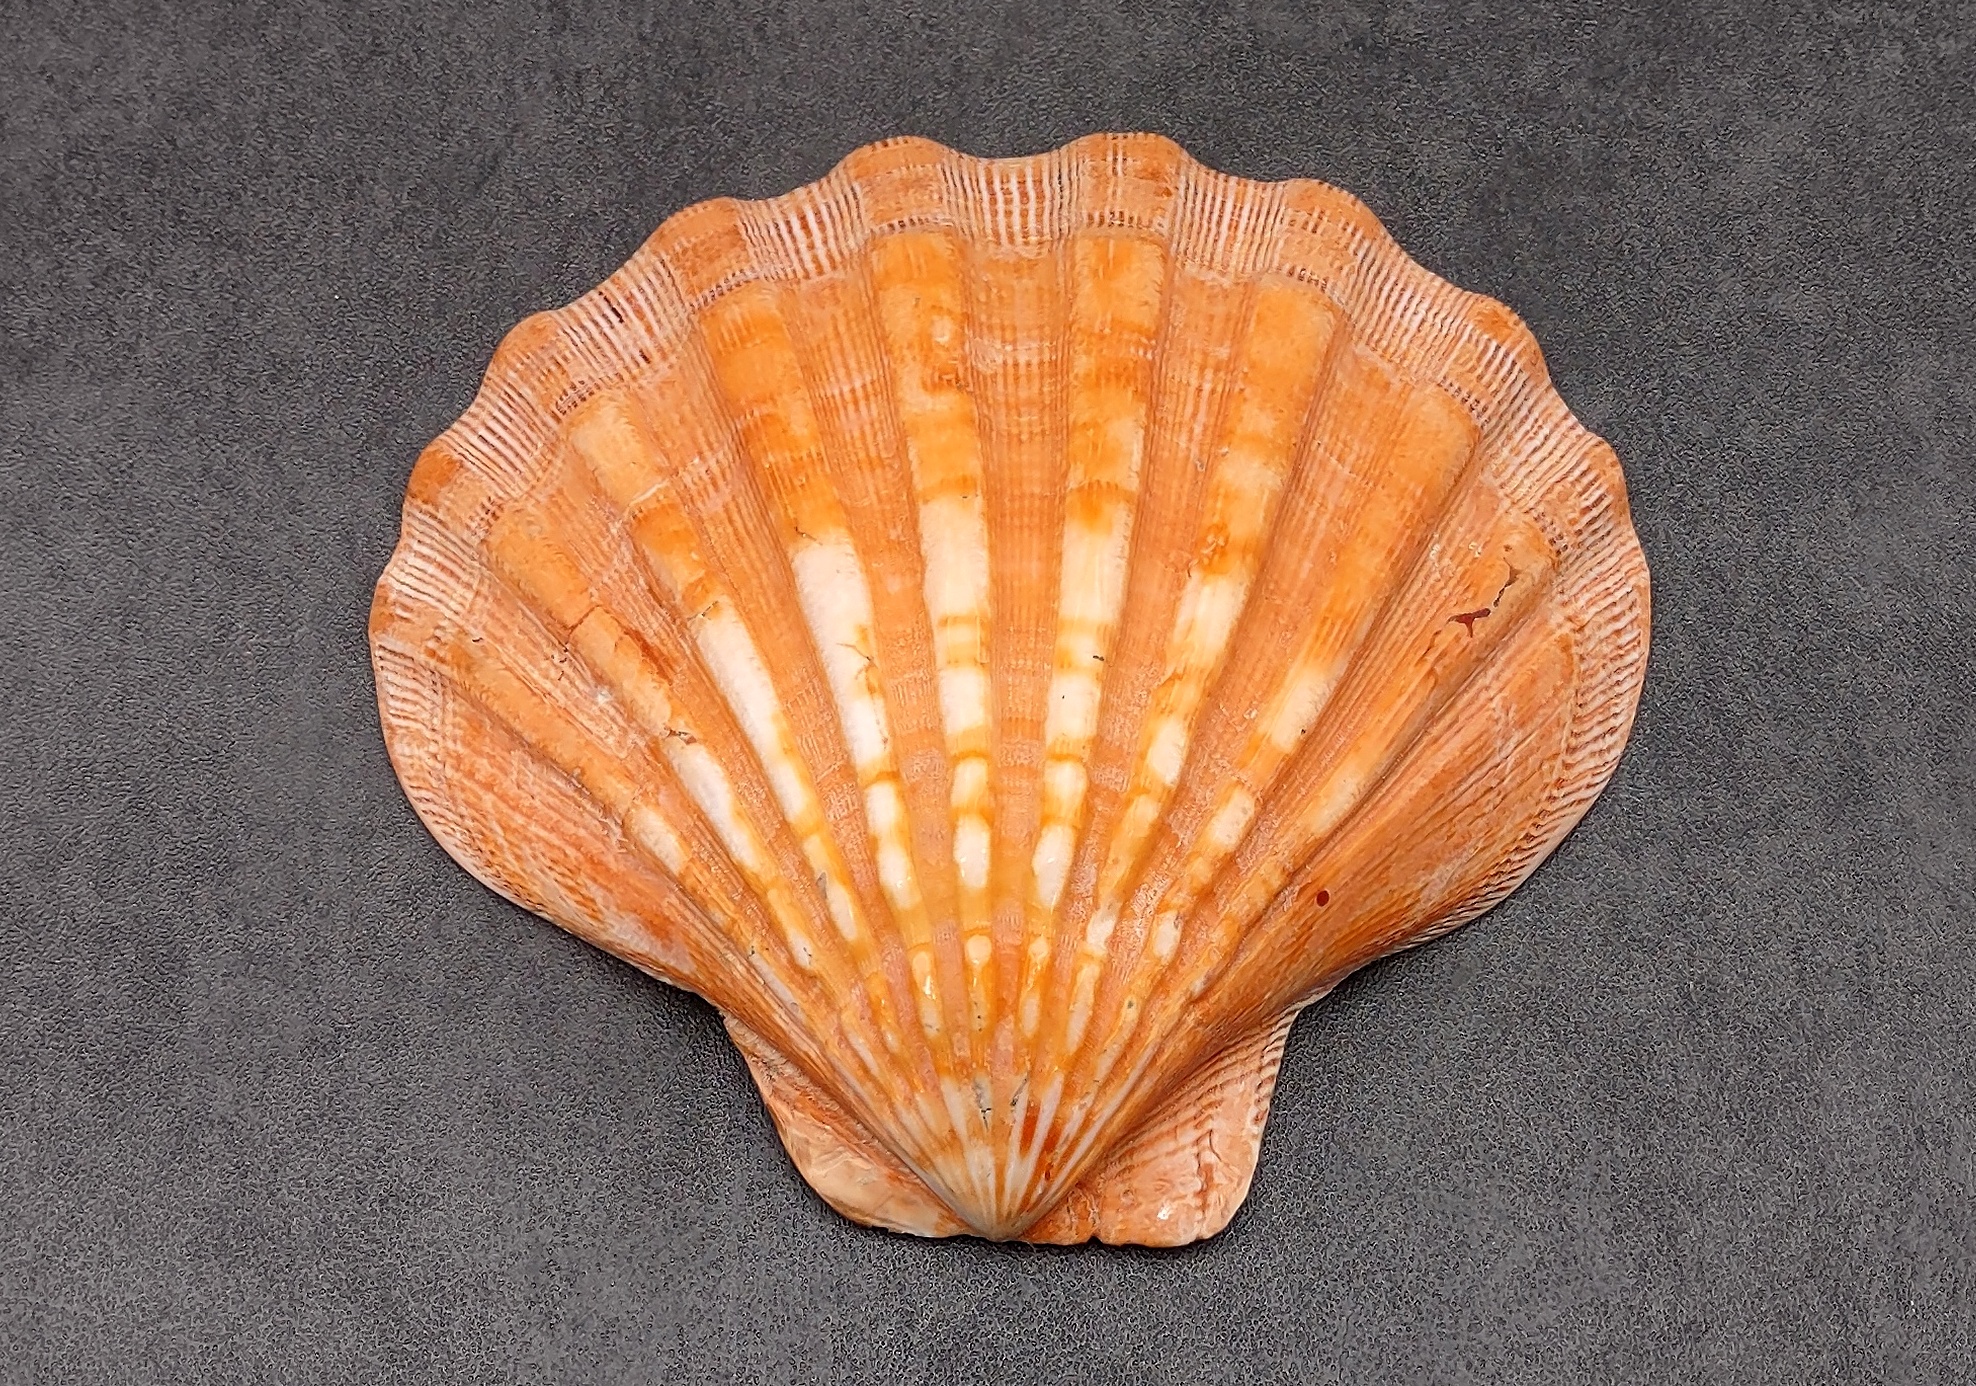 Polished Orange Lion's Paw Scallop Shell Pecten Subnodosus (1